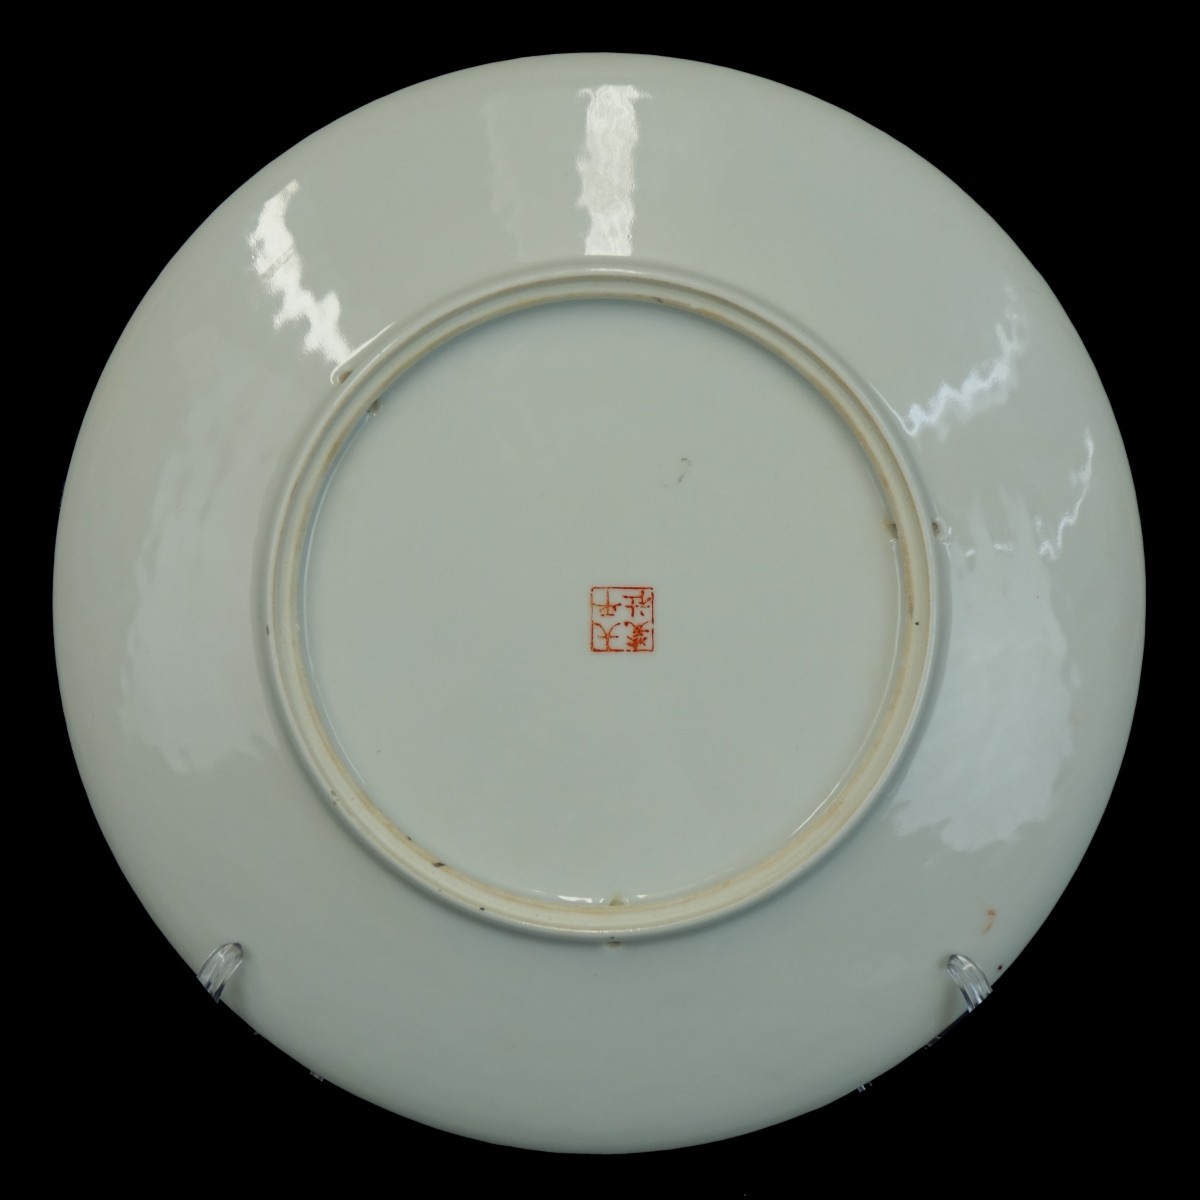 Chinese Republic Period Plate